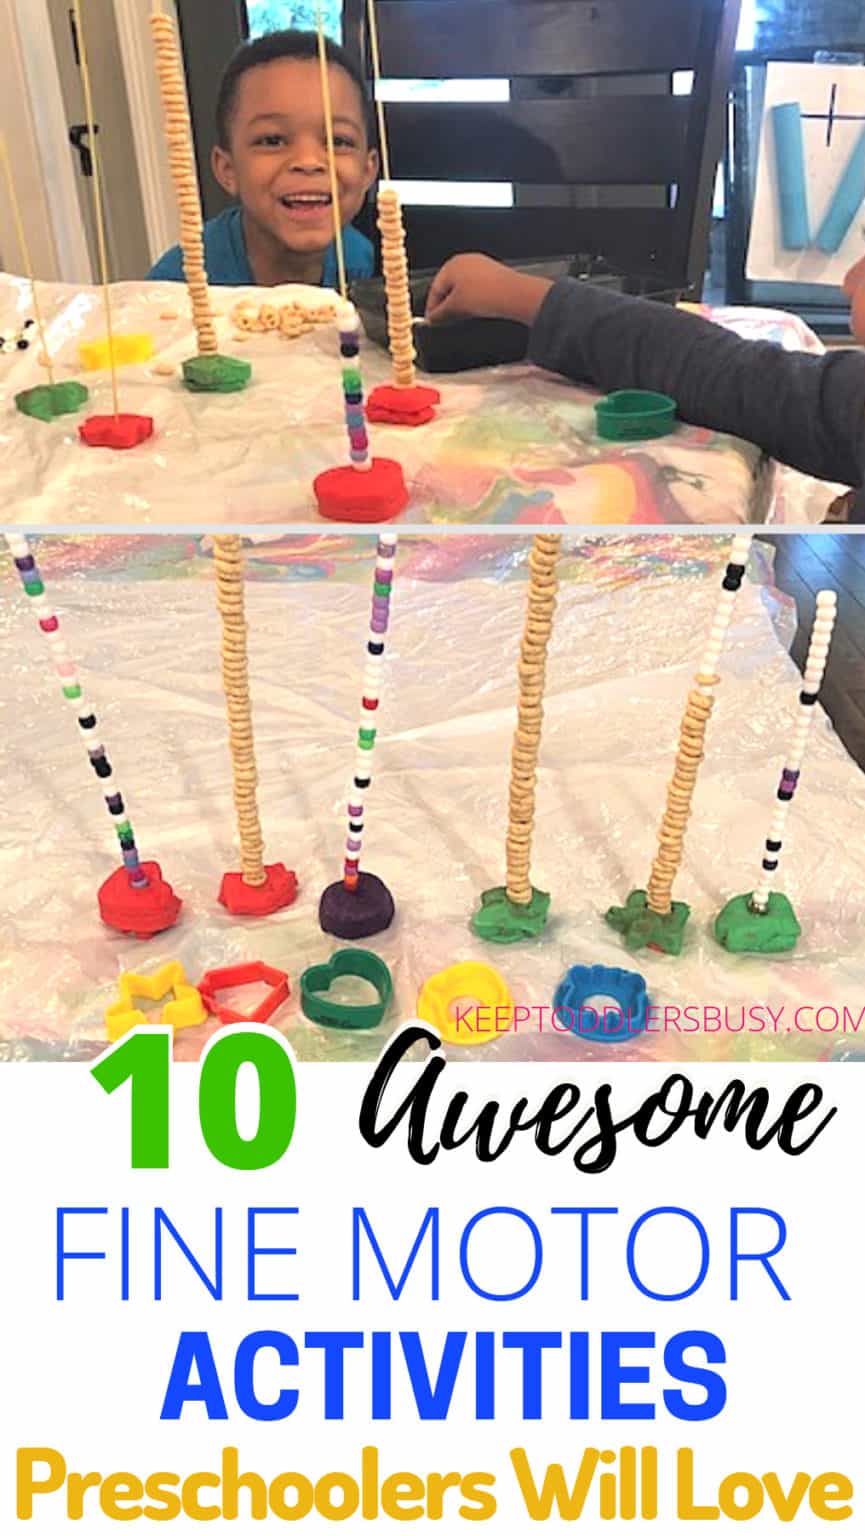 10-awesome-fine-motor-activities-preschoolers-will-love